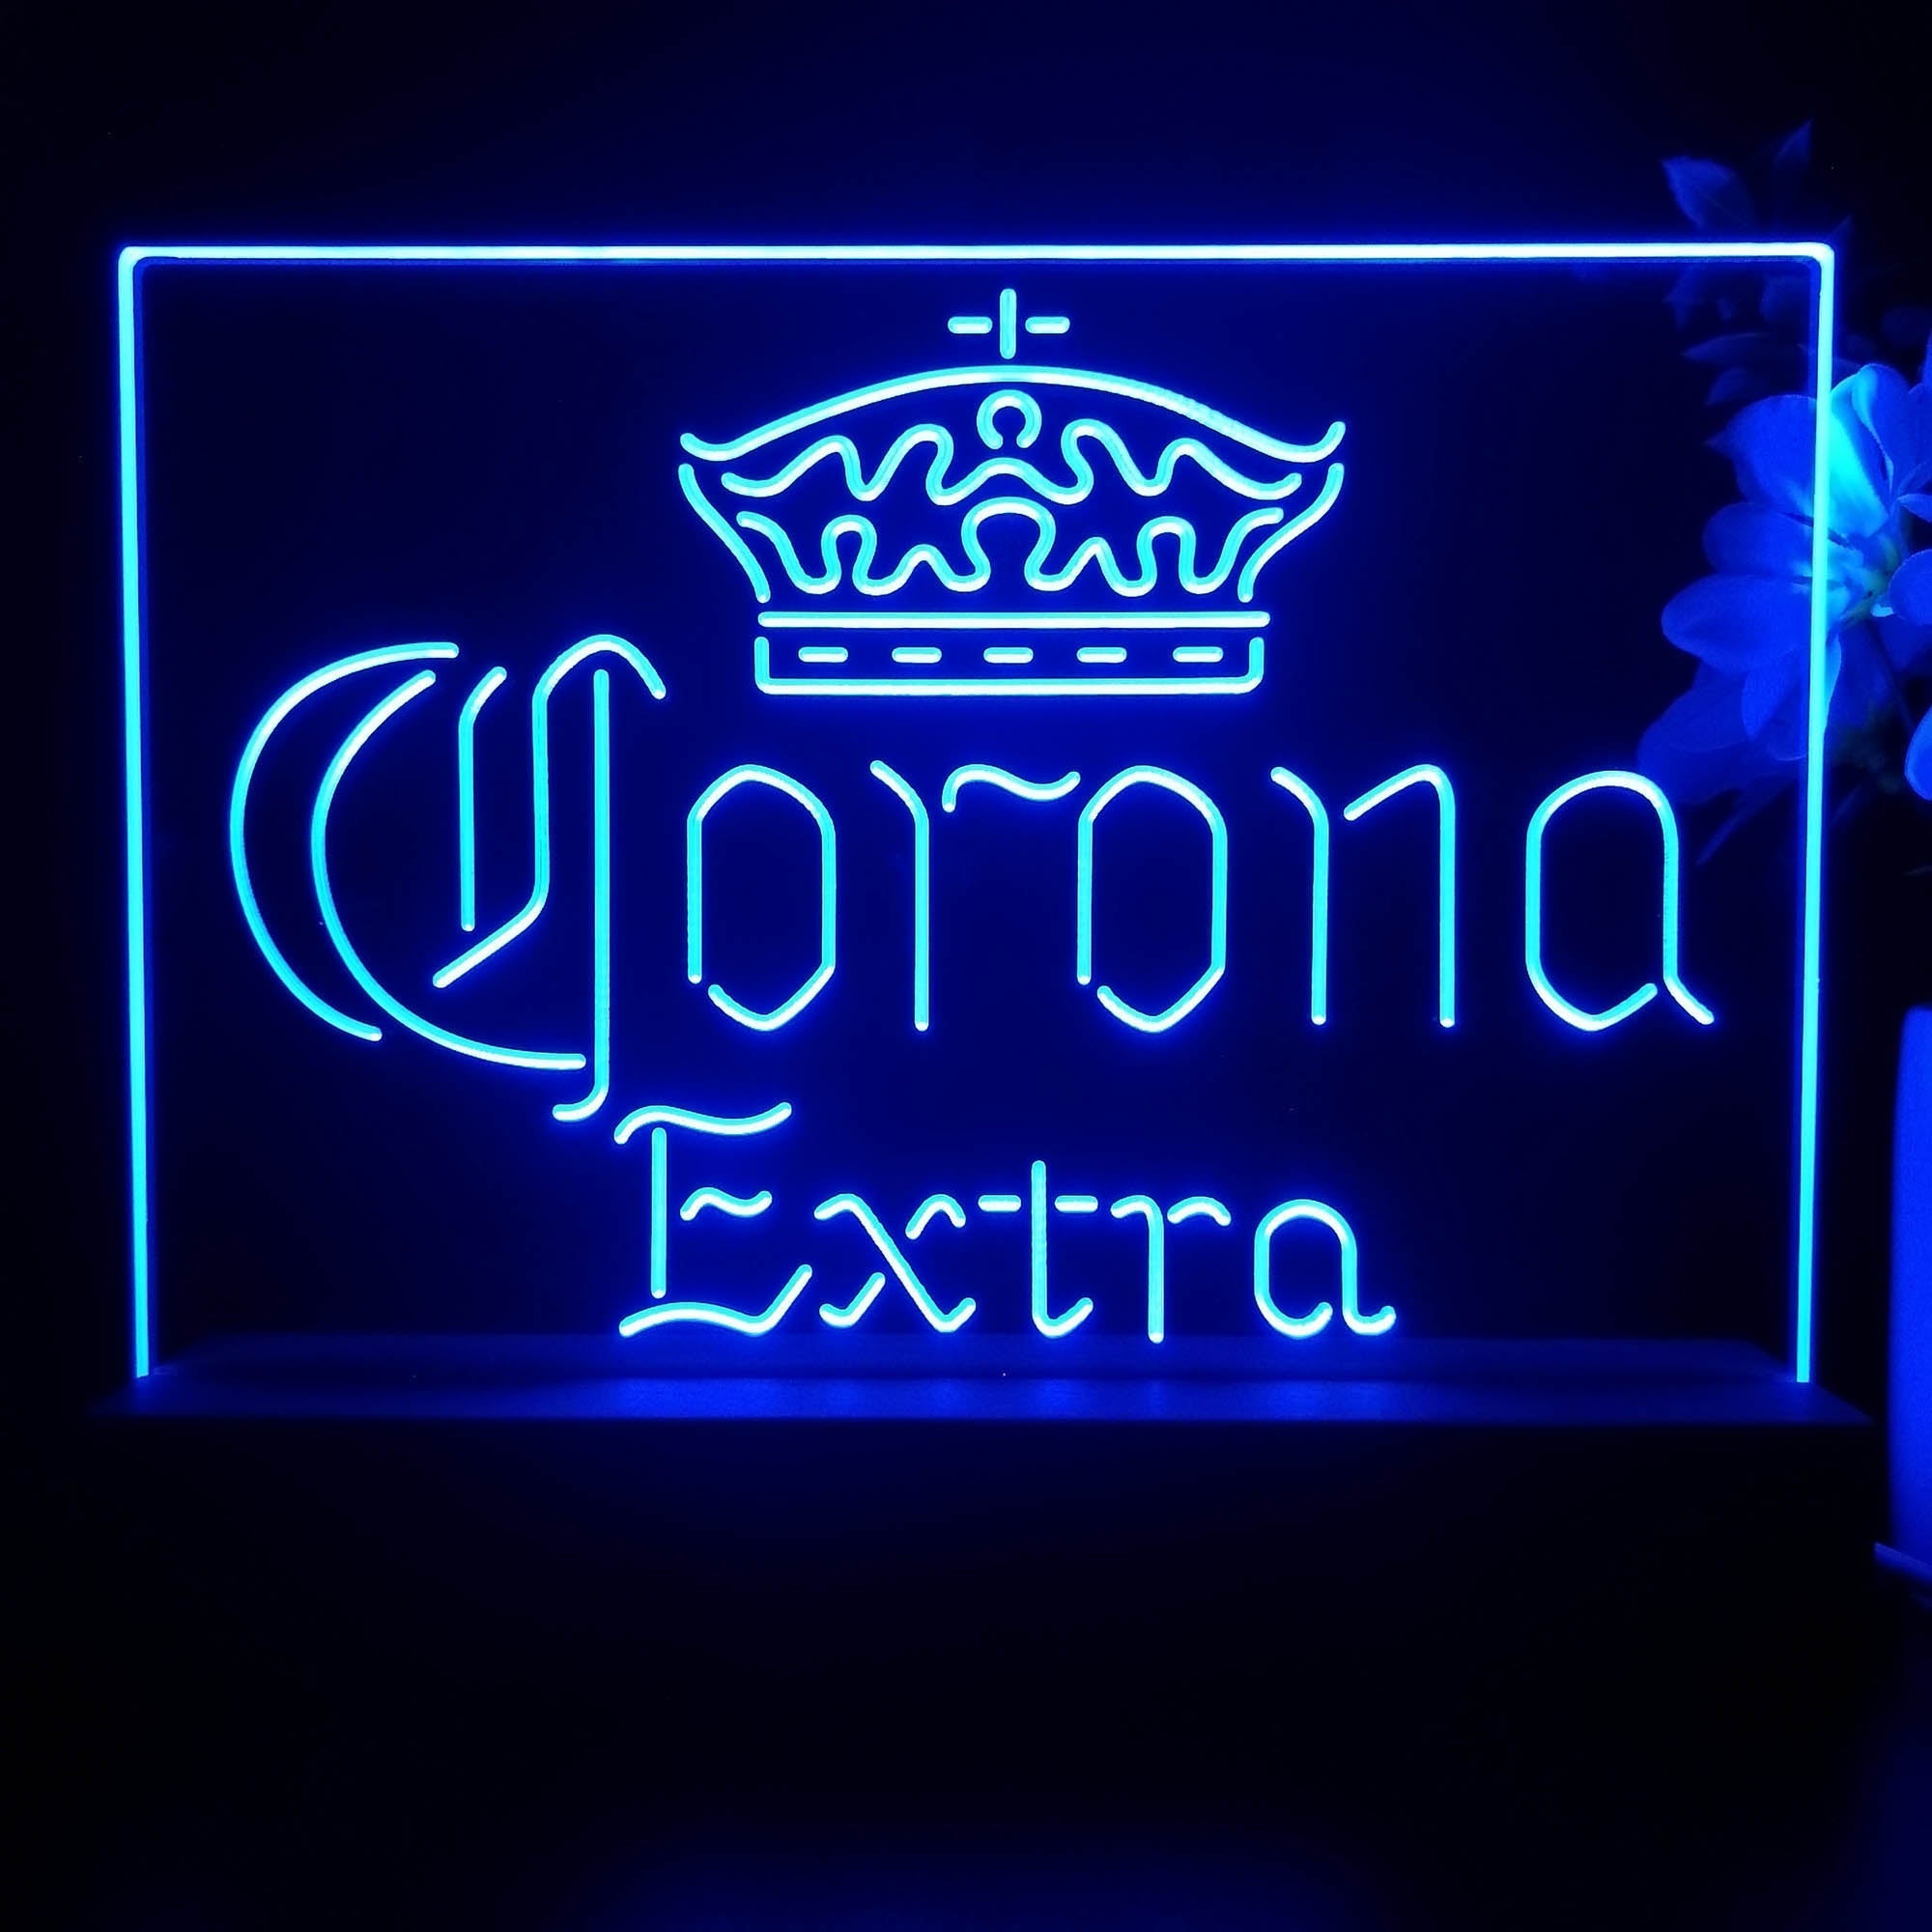 Corona Crown Extra Classic Neon Sign Pub Bar Lamp